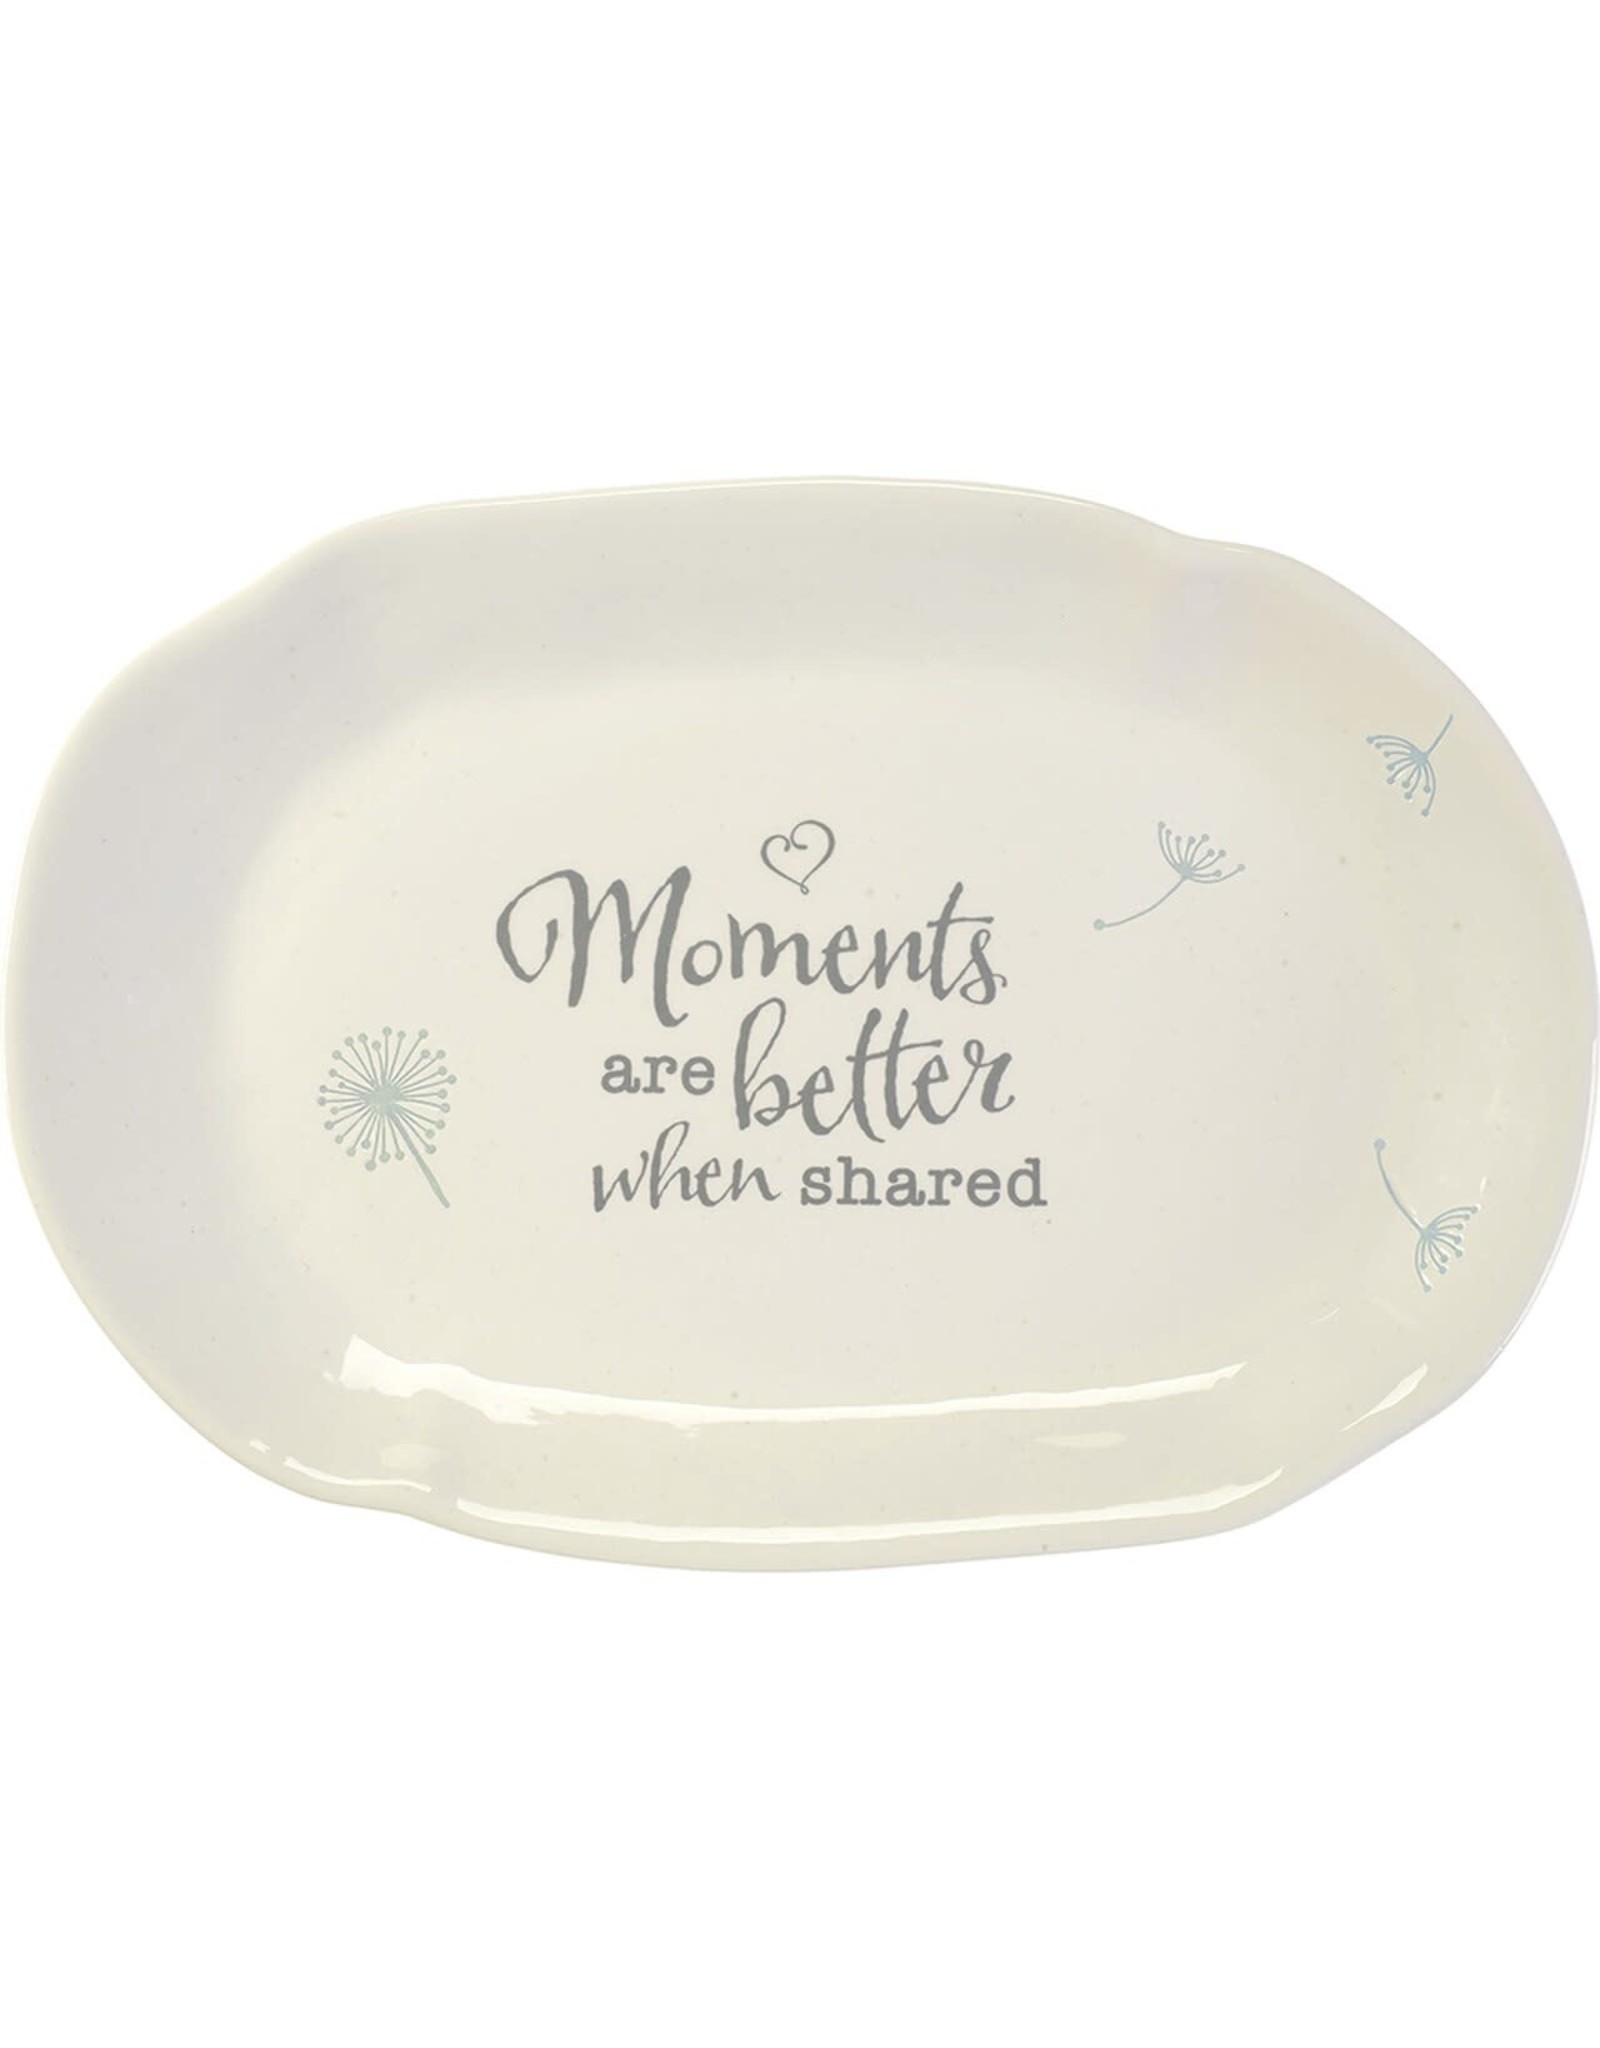 Precious Moments Moments Are Better When Shared, PlatterMoments Are Better When Shared, Platter Moments Are Better When Shared Large Platter